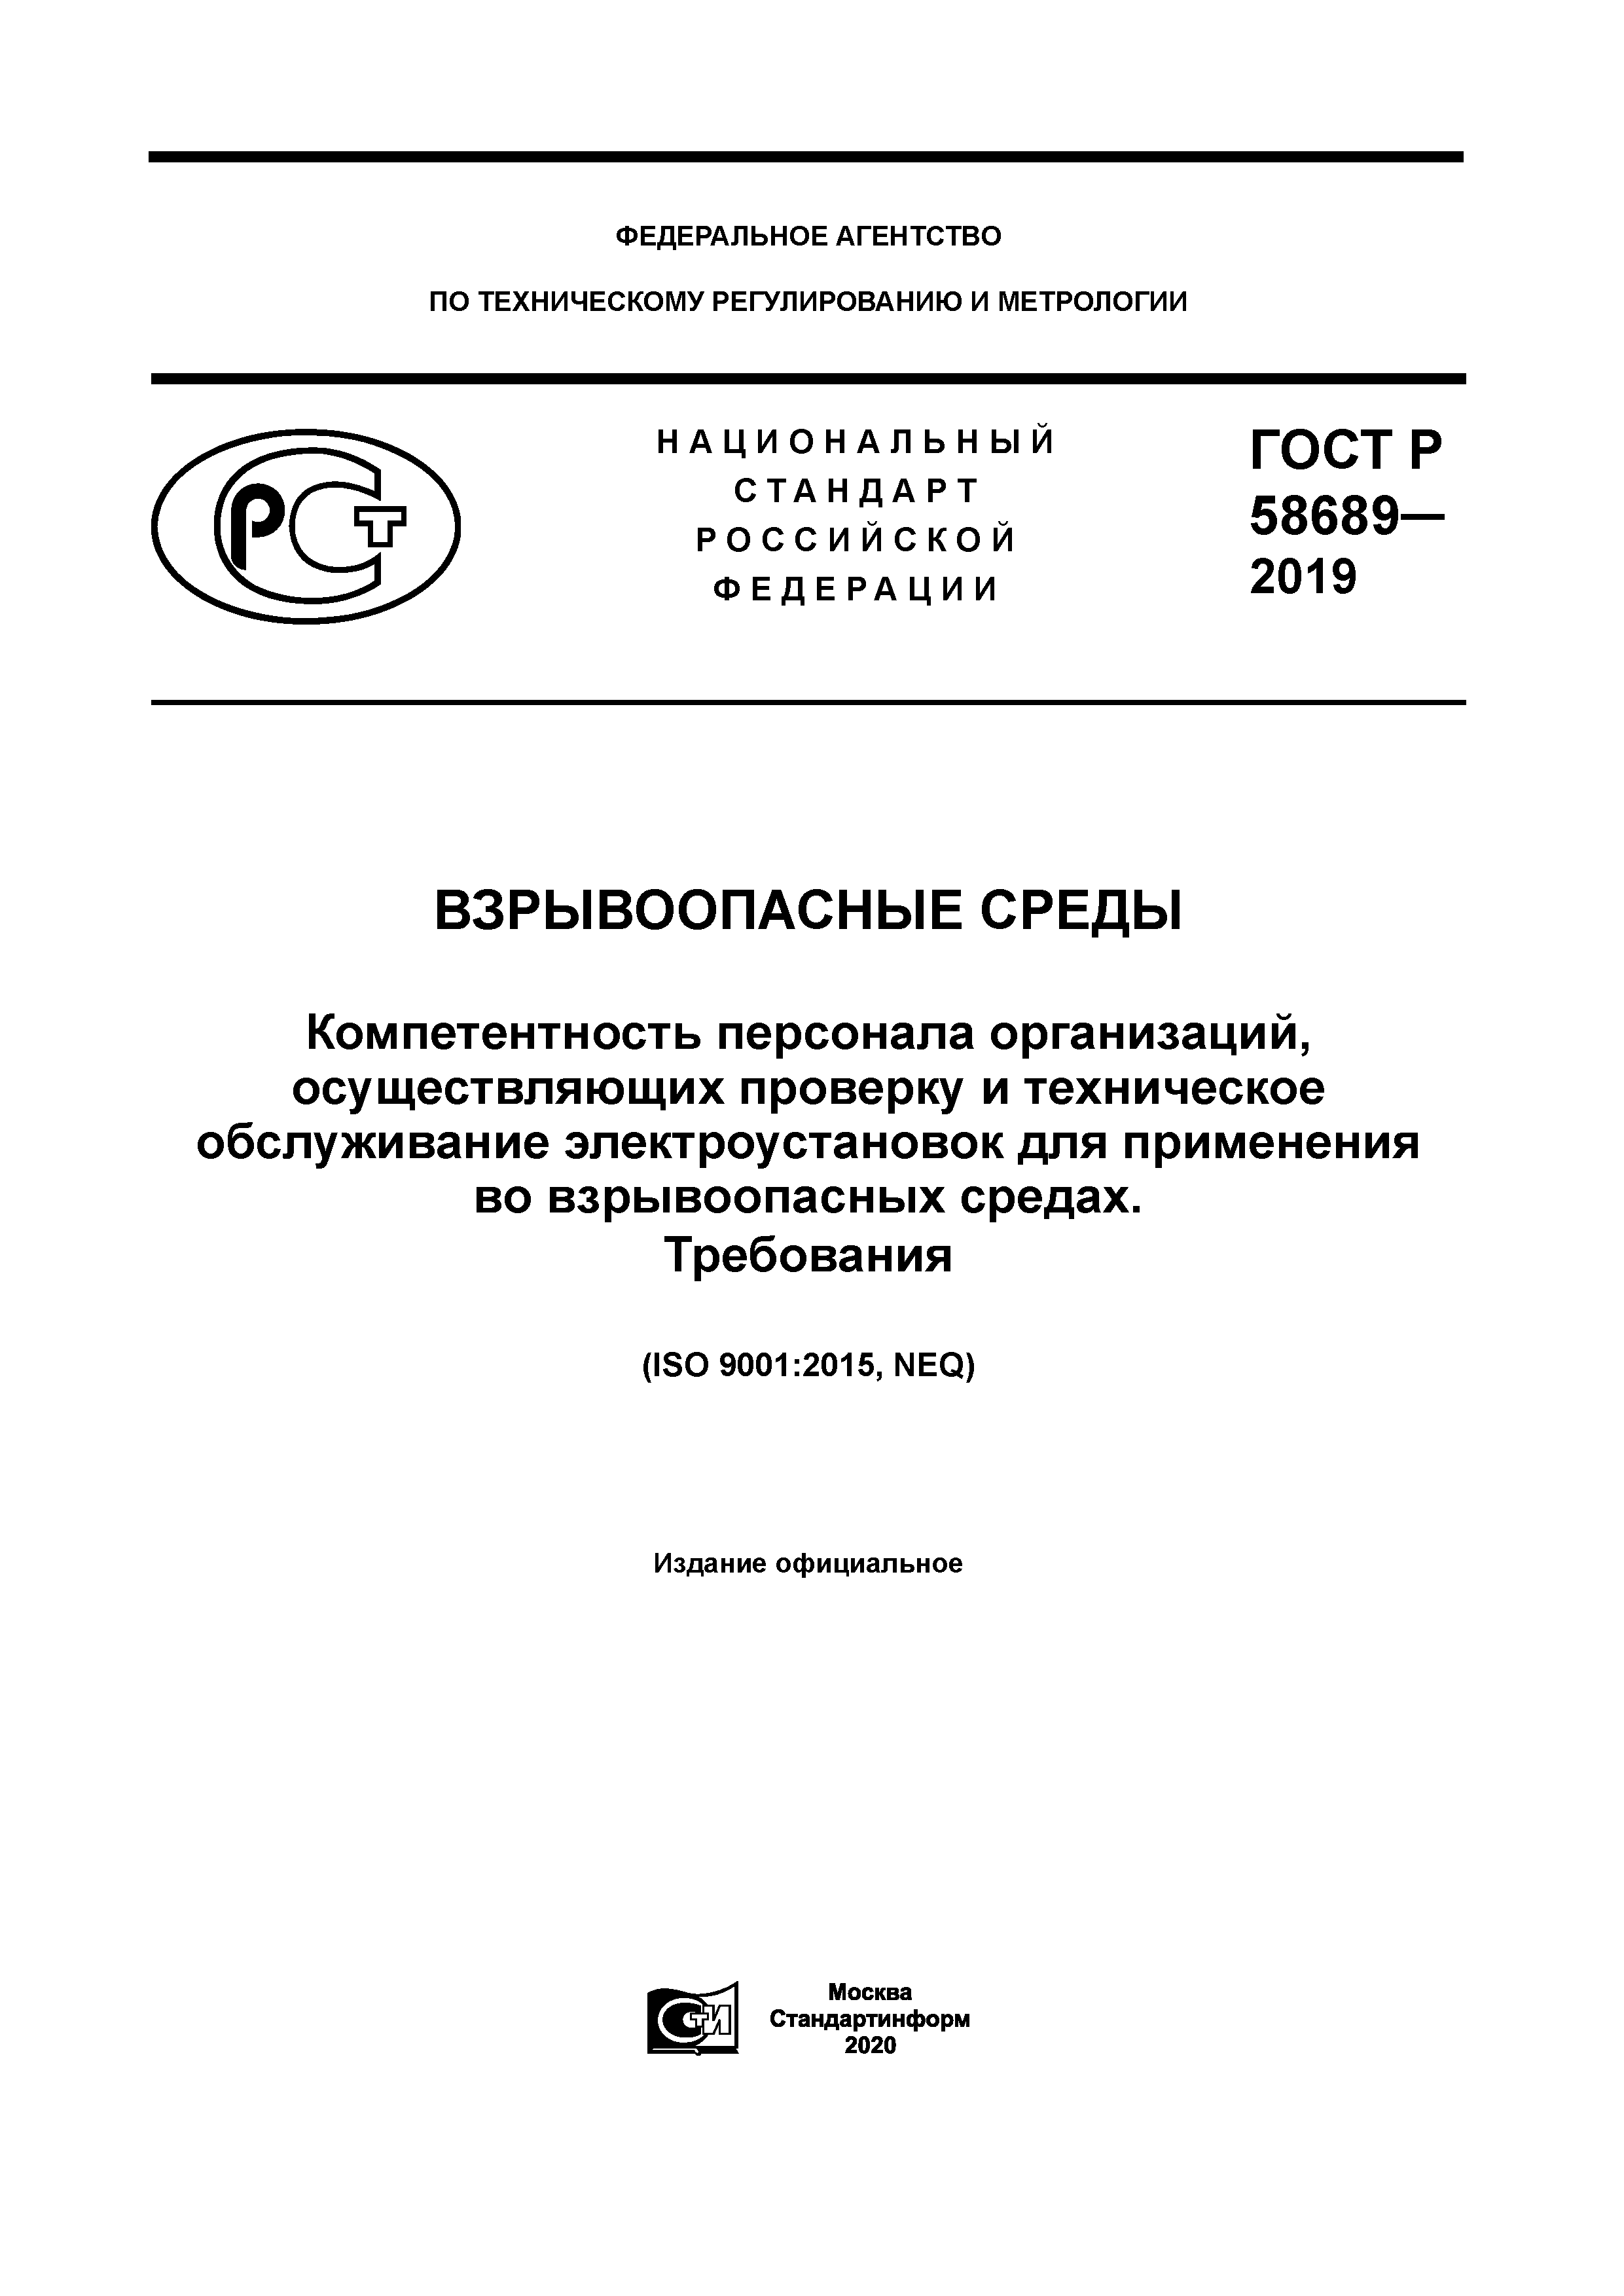 ГОСТ Р 58689-2019